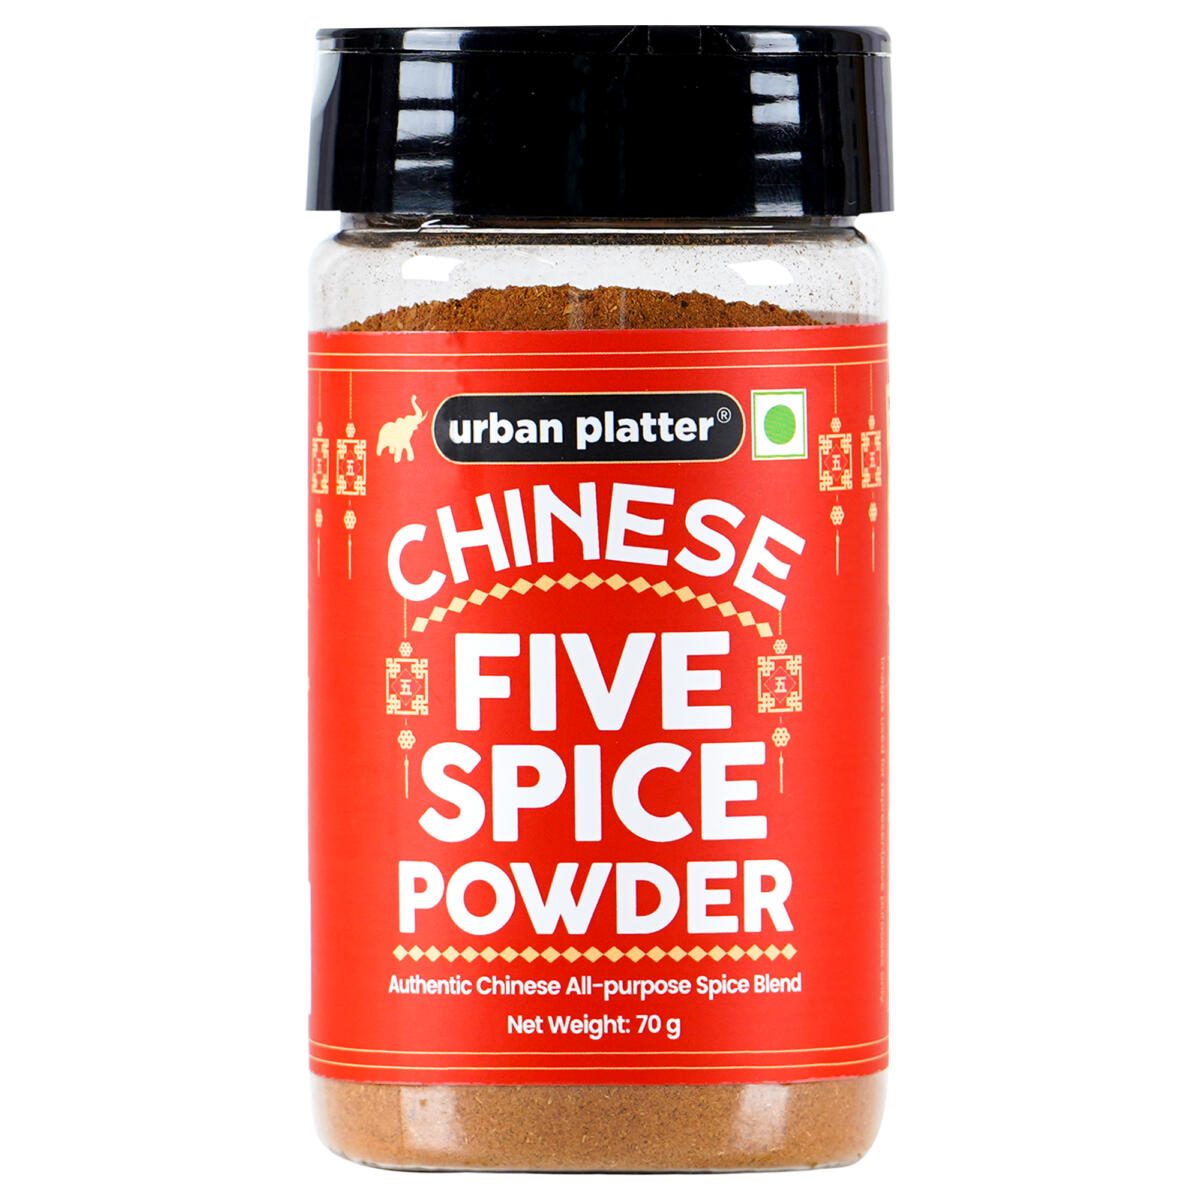 https://urbanplatter.in/wp-content/uploads/2016/09/12158-01-Chinese-Five-Spice-Powder-70g.jpg